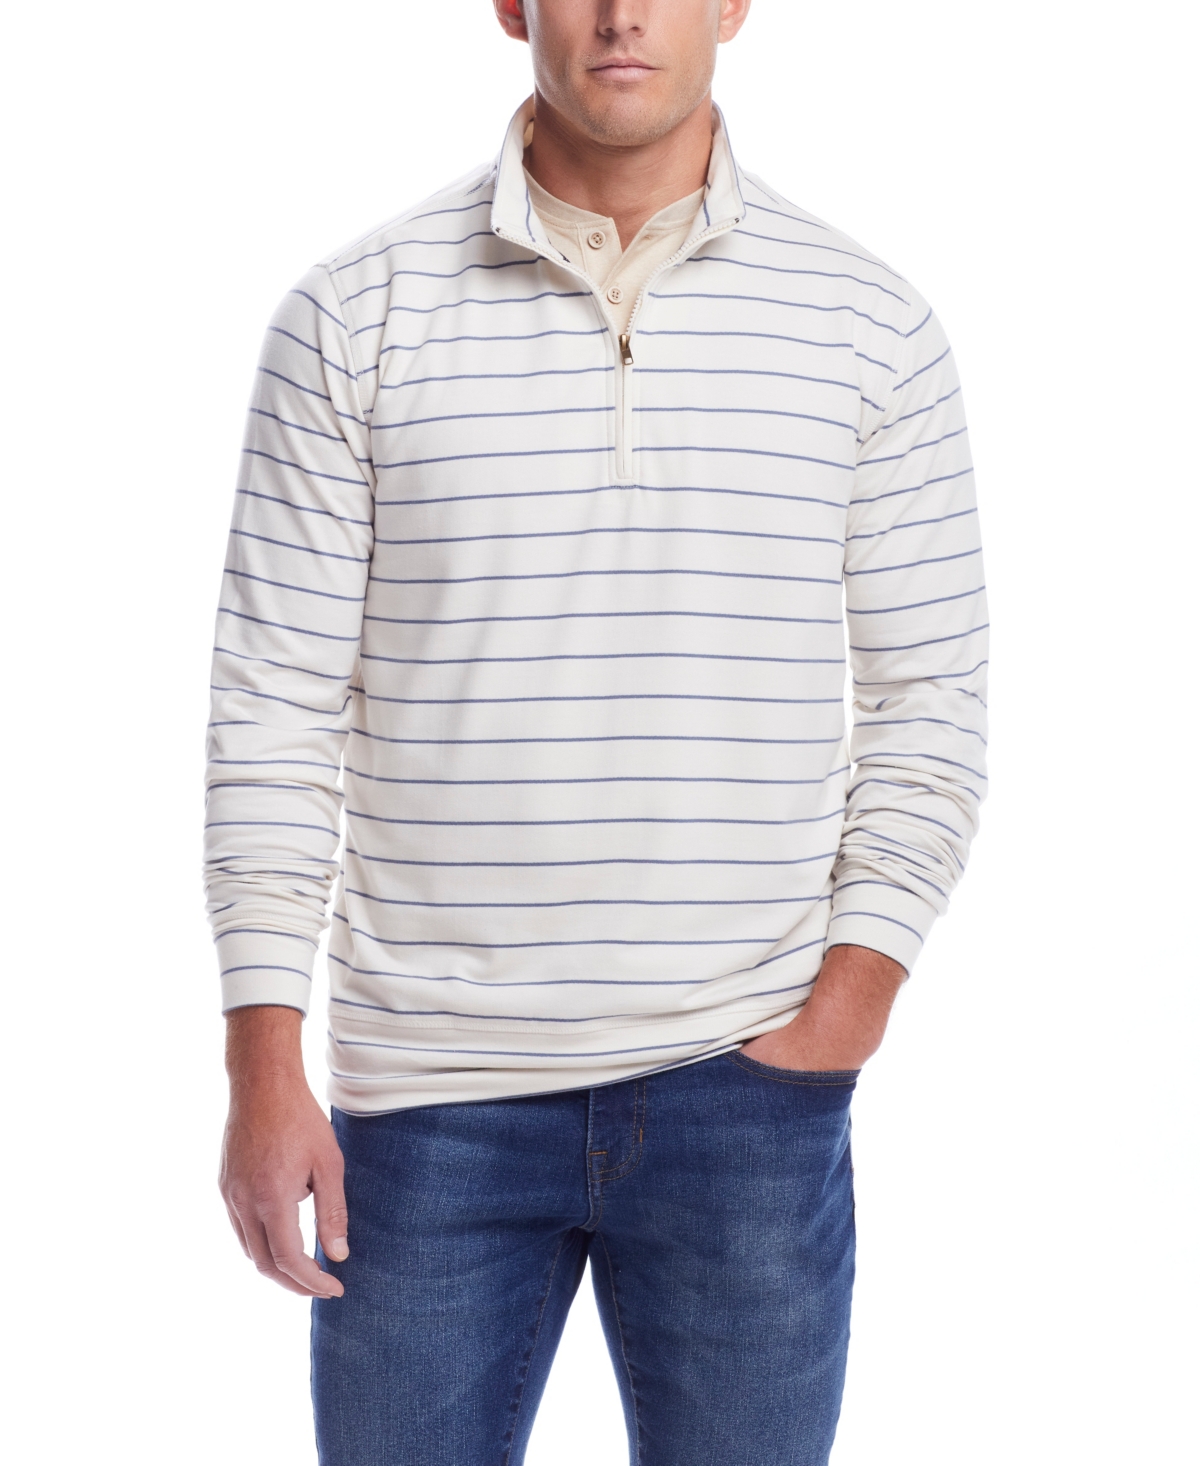 Men's Striped Long Sleeve Quarter Zip Pullover T-shirt - Antique White